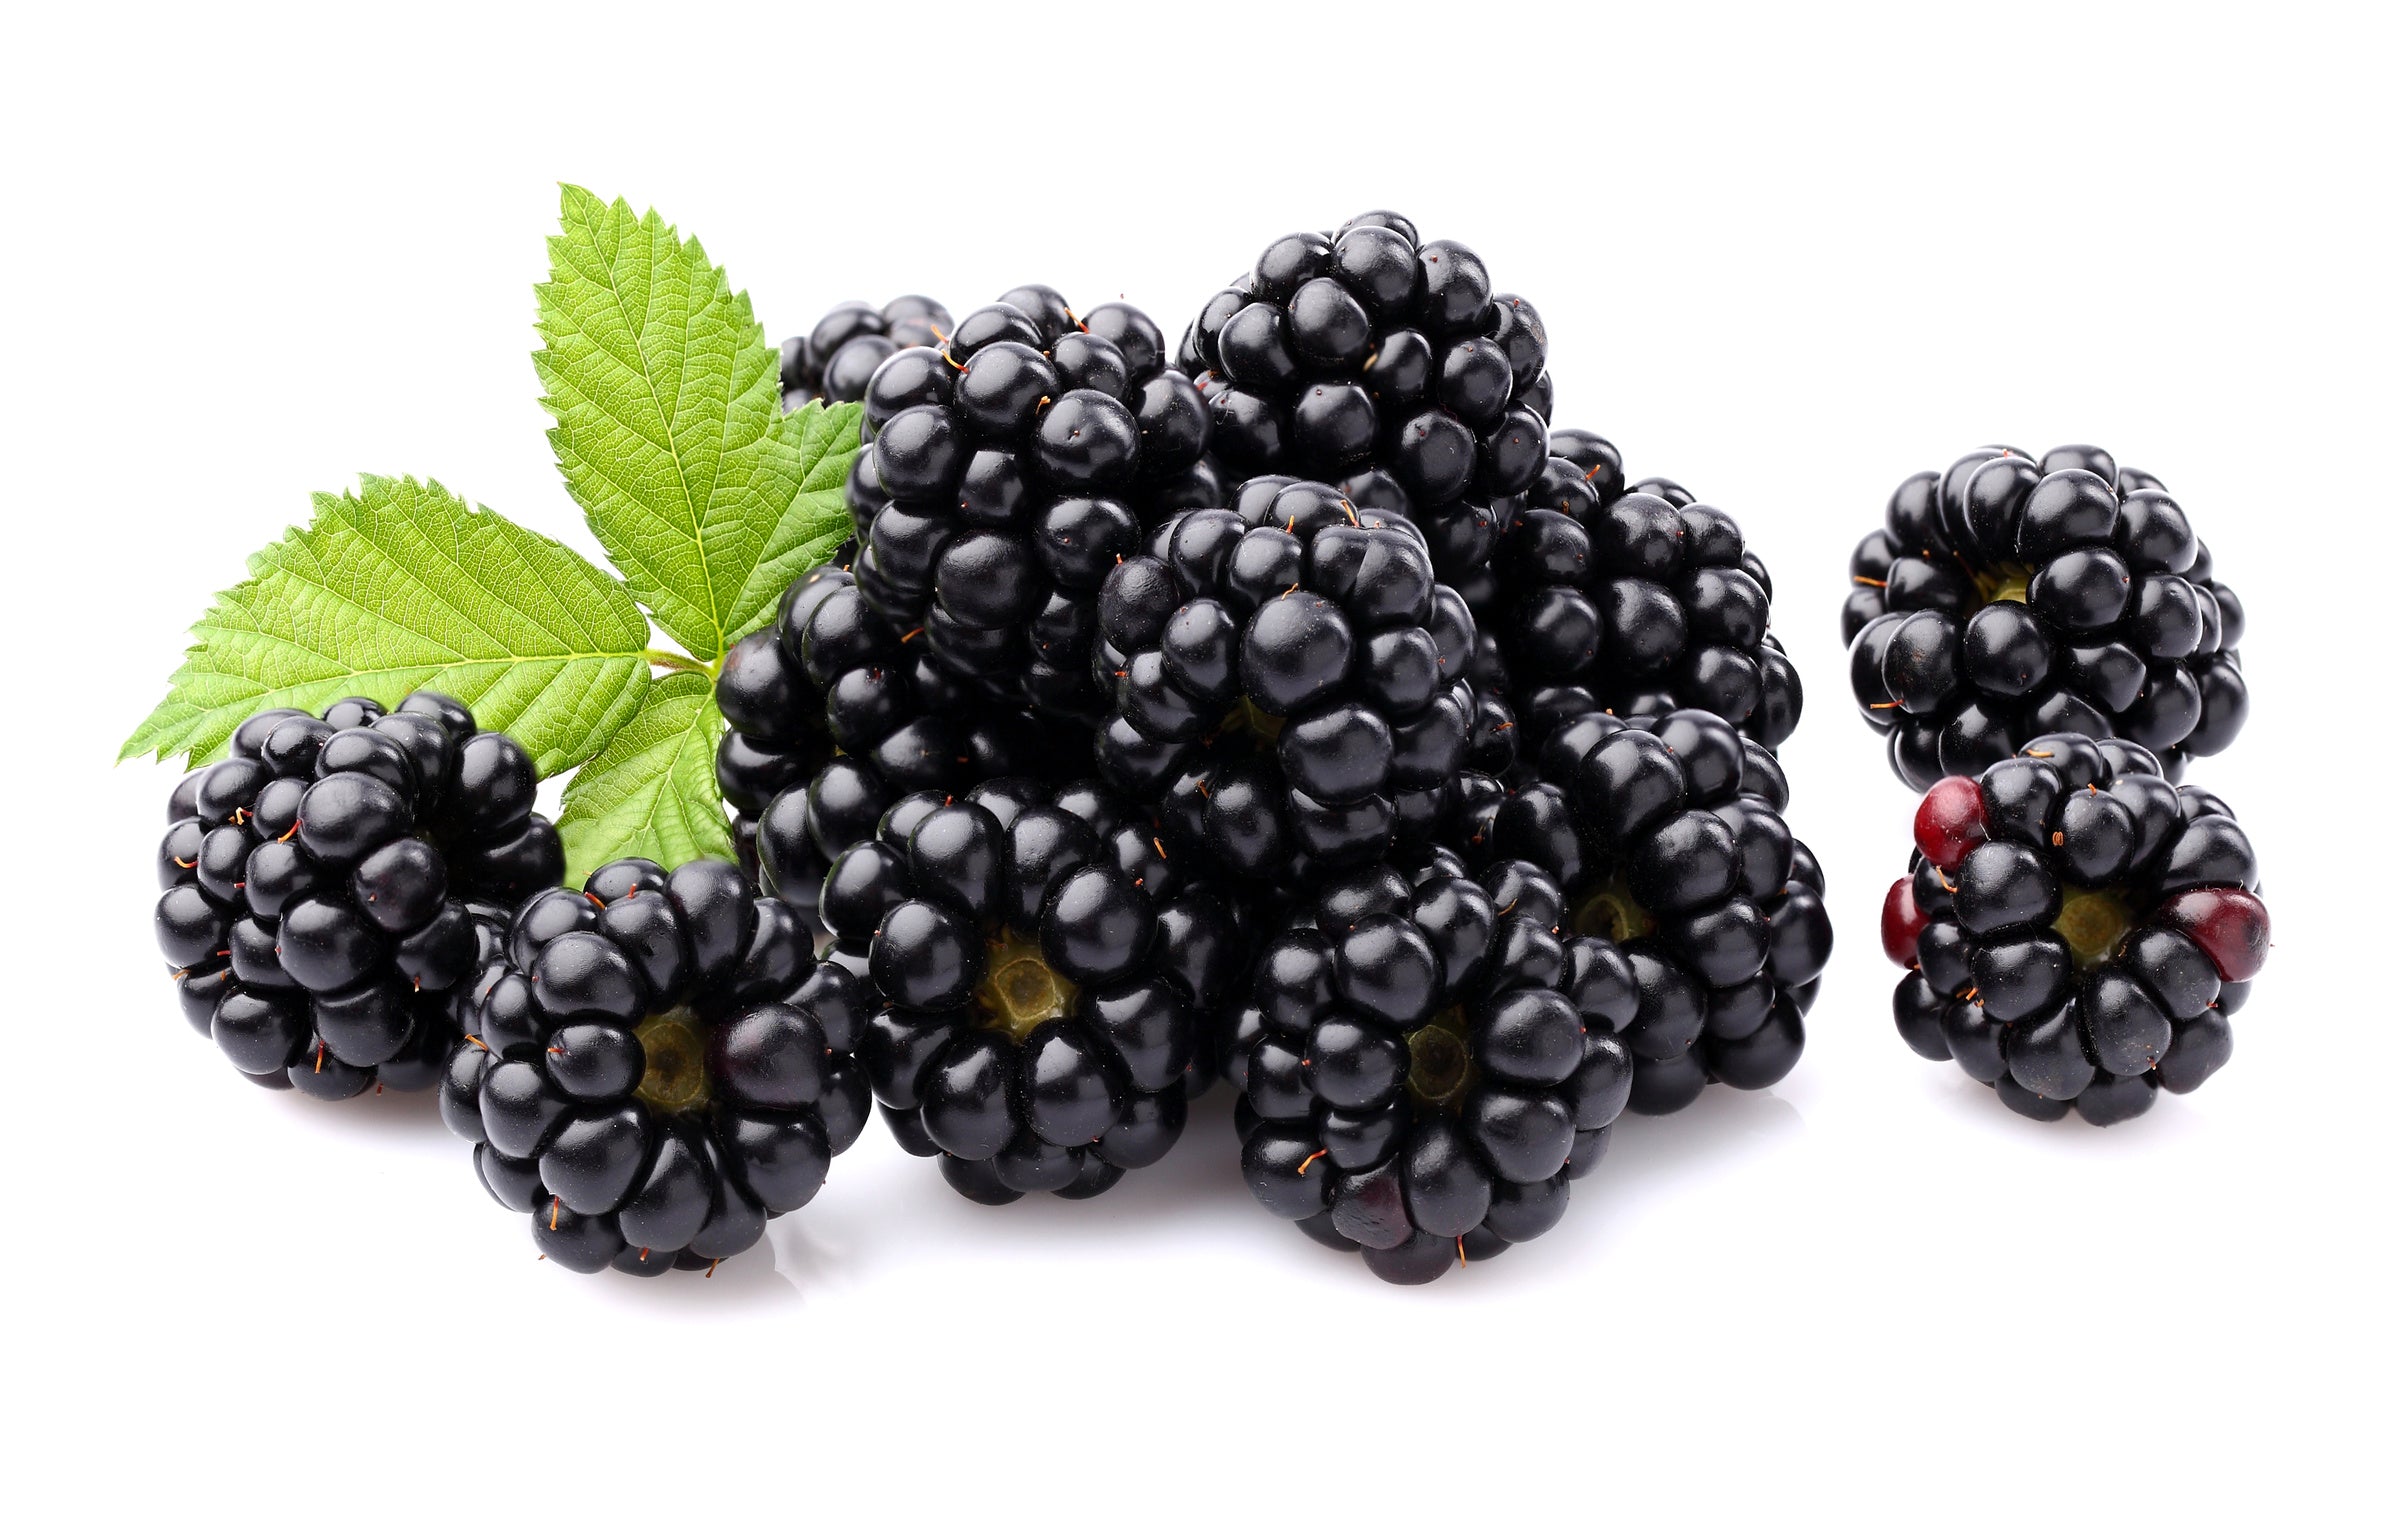 Blackberries: An Antioxidant Powerhouse